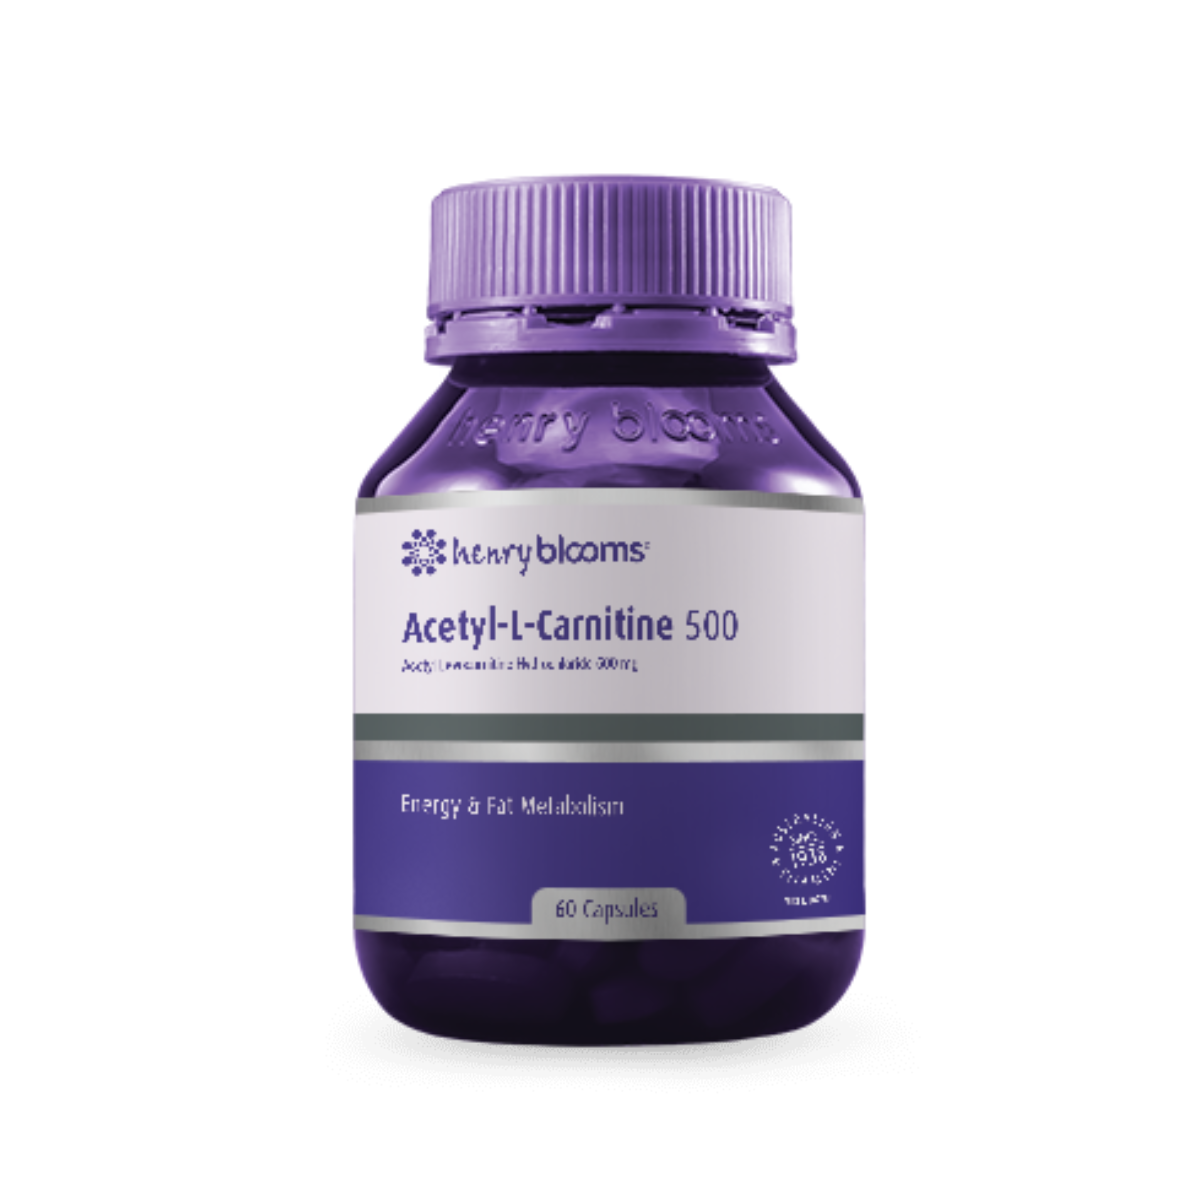 Acetyl-L-Carnitine 500 60c